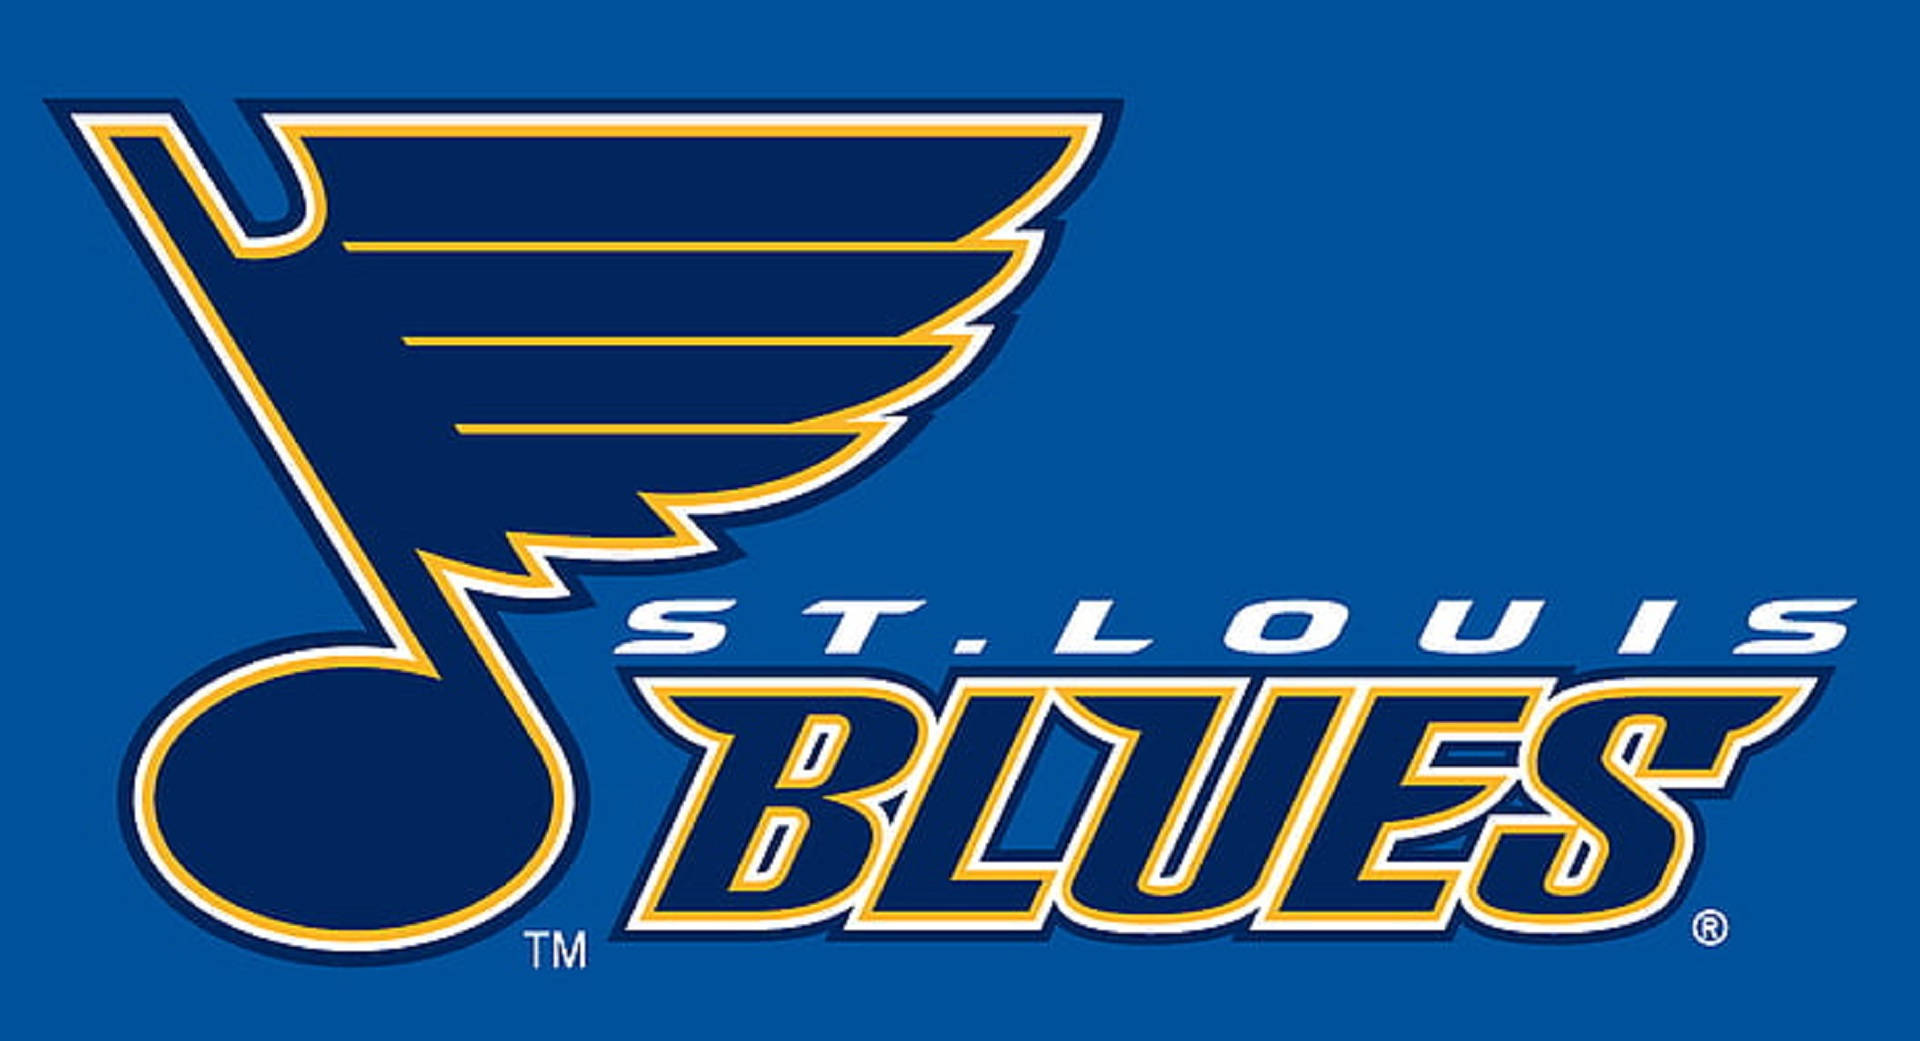 Ice Hockey Team St Louis Blues Background